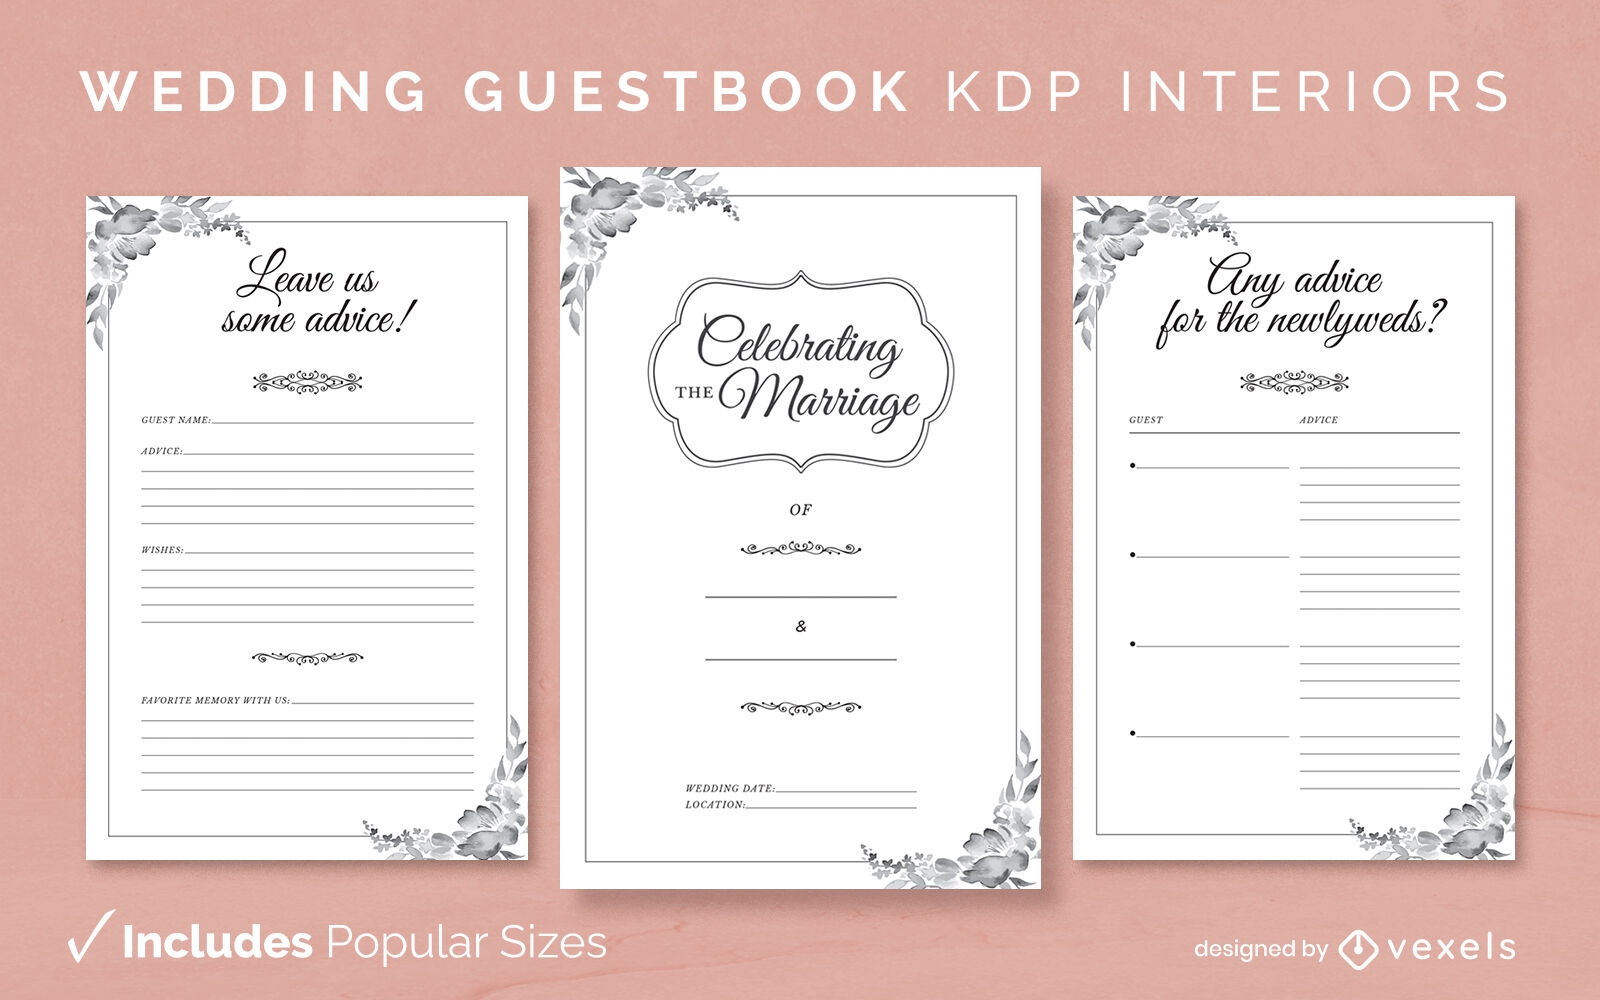 Livro de visitas de casamento elegante kdp design de interiores